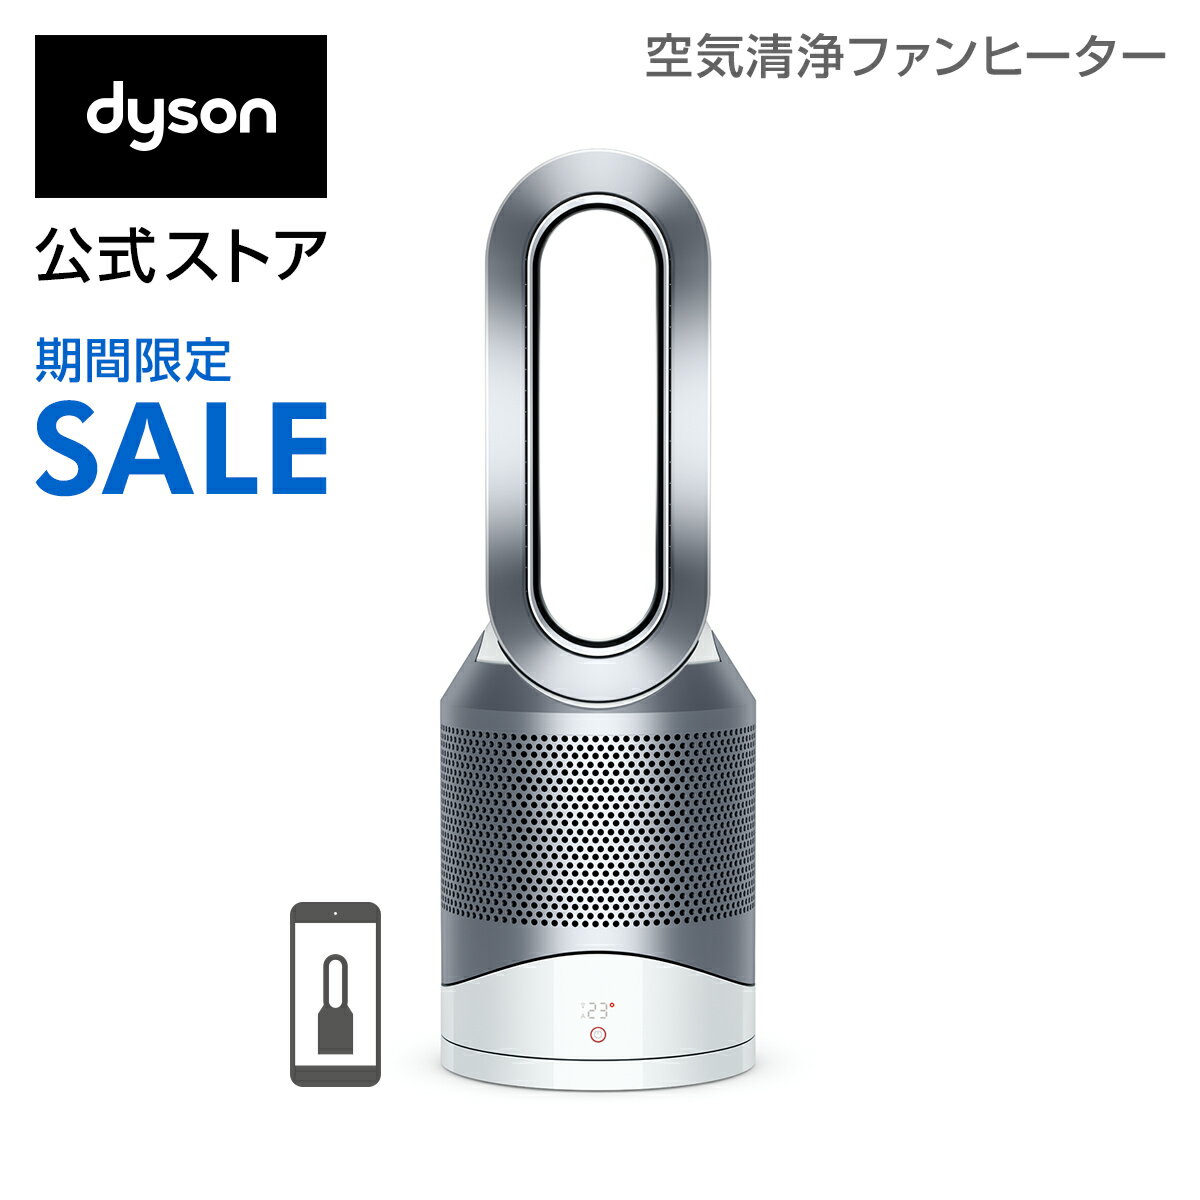 Dyson (ダイソン) ダイソン Dyson Hot+Cool AM09WN ファンヒーター 